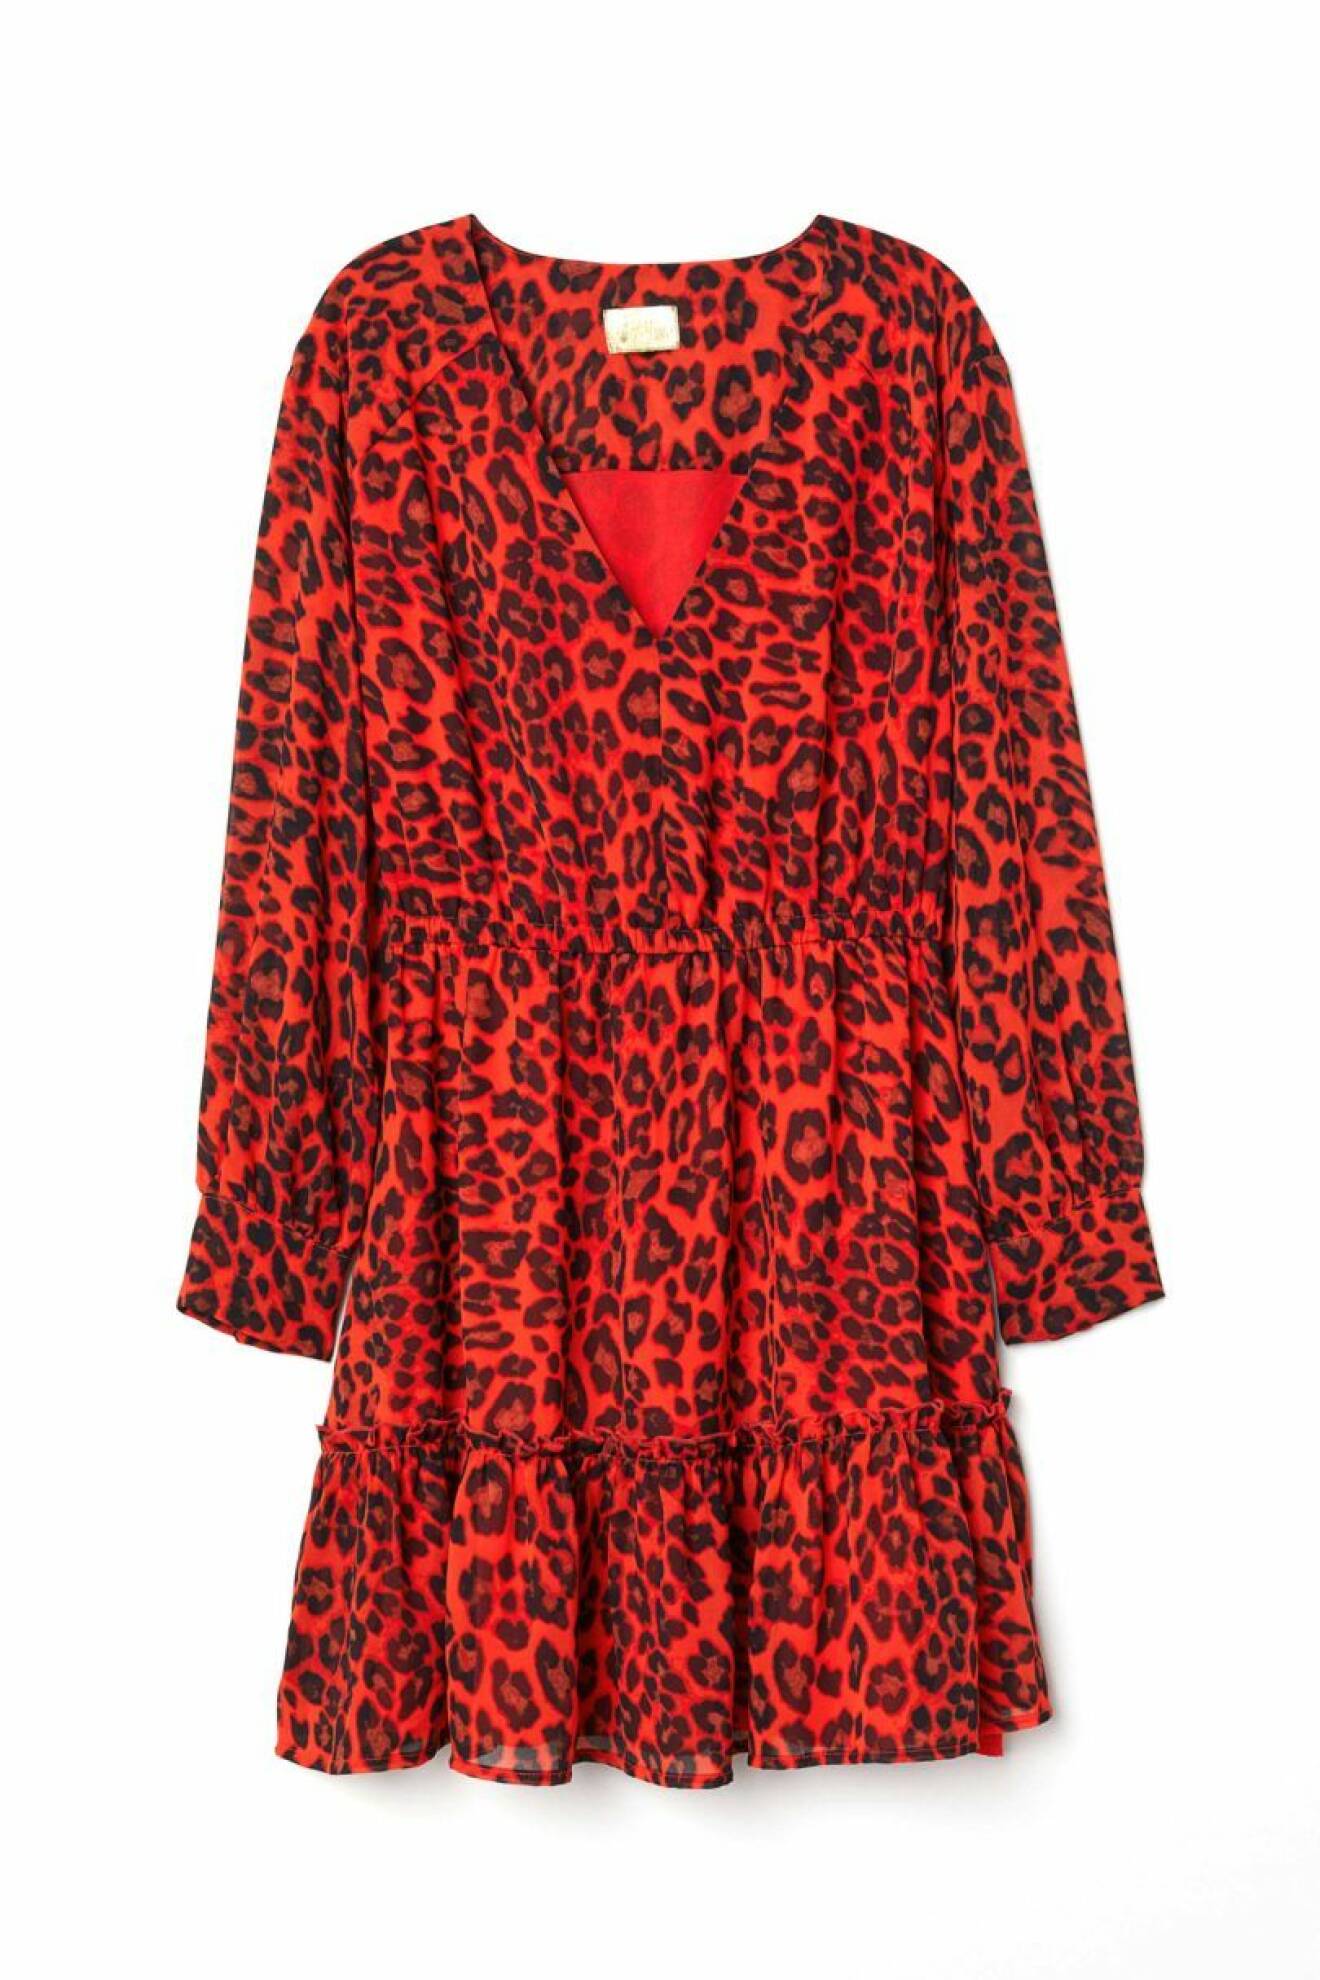 klänning-leopard-röd-hm